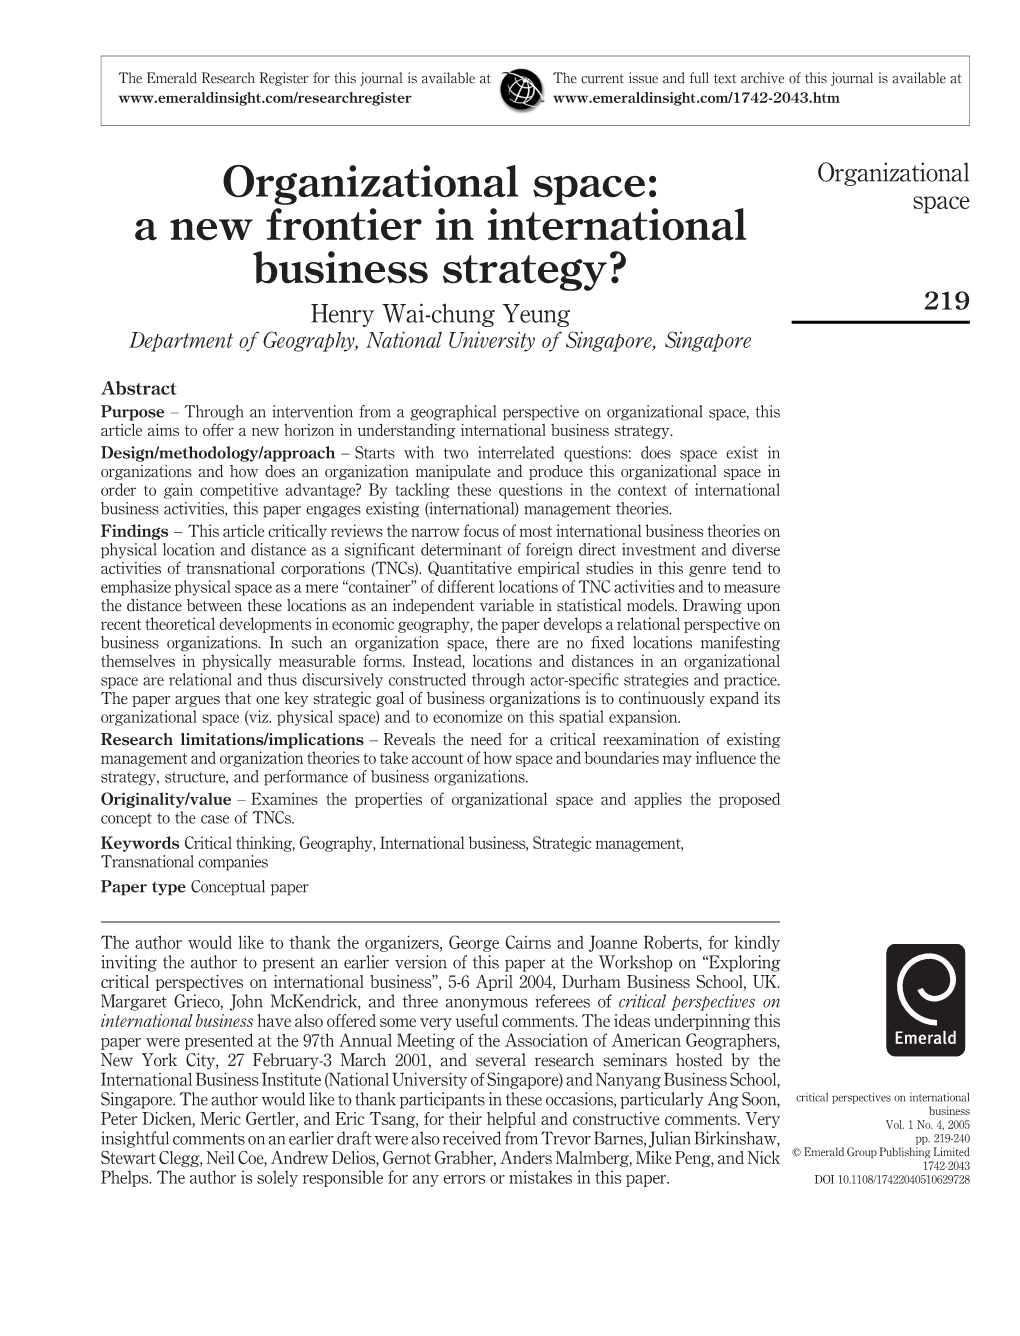 Organizational Space